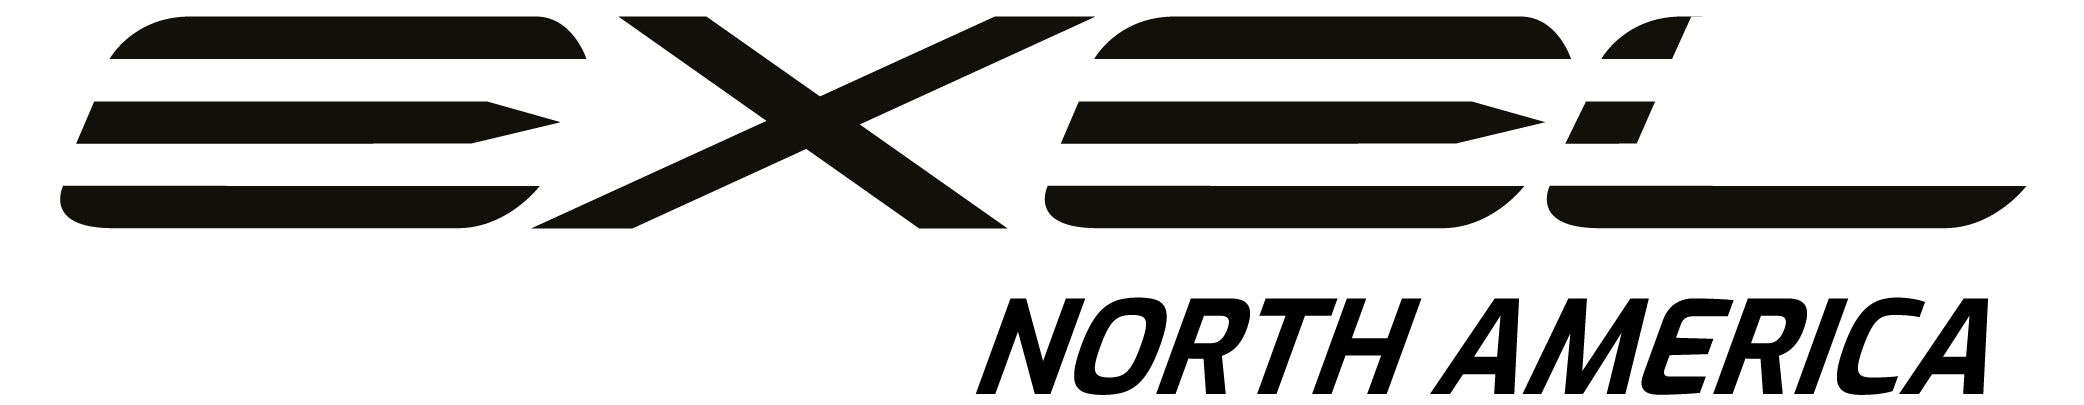 Exel North America